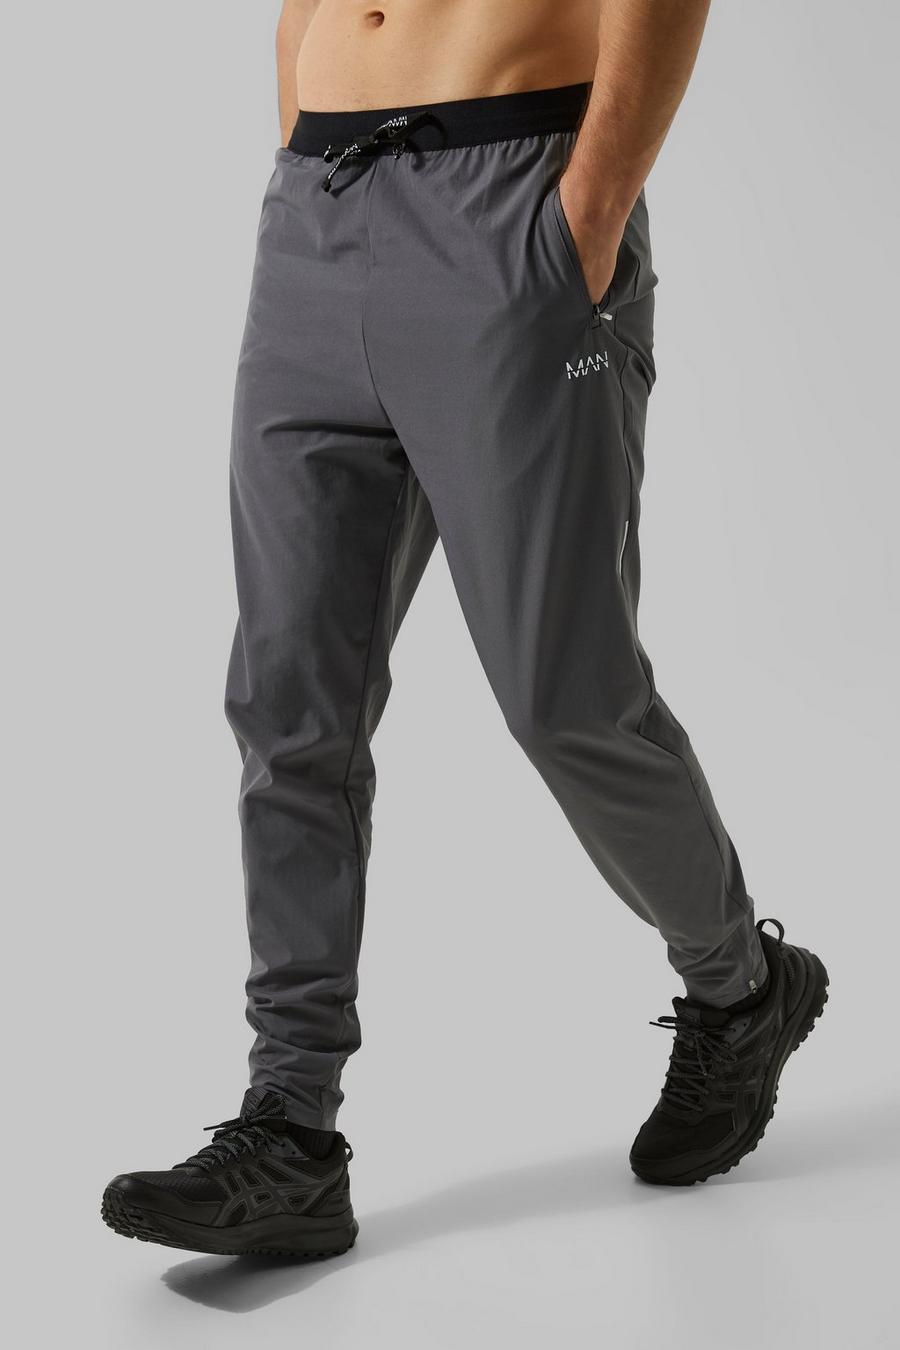 Pantalón deportivo Tall MAN Active ligero resistente, Charcoal image number 1